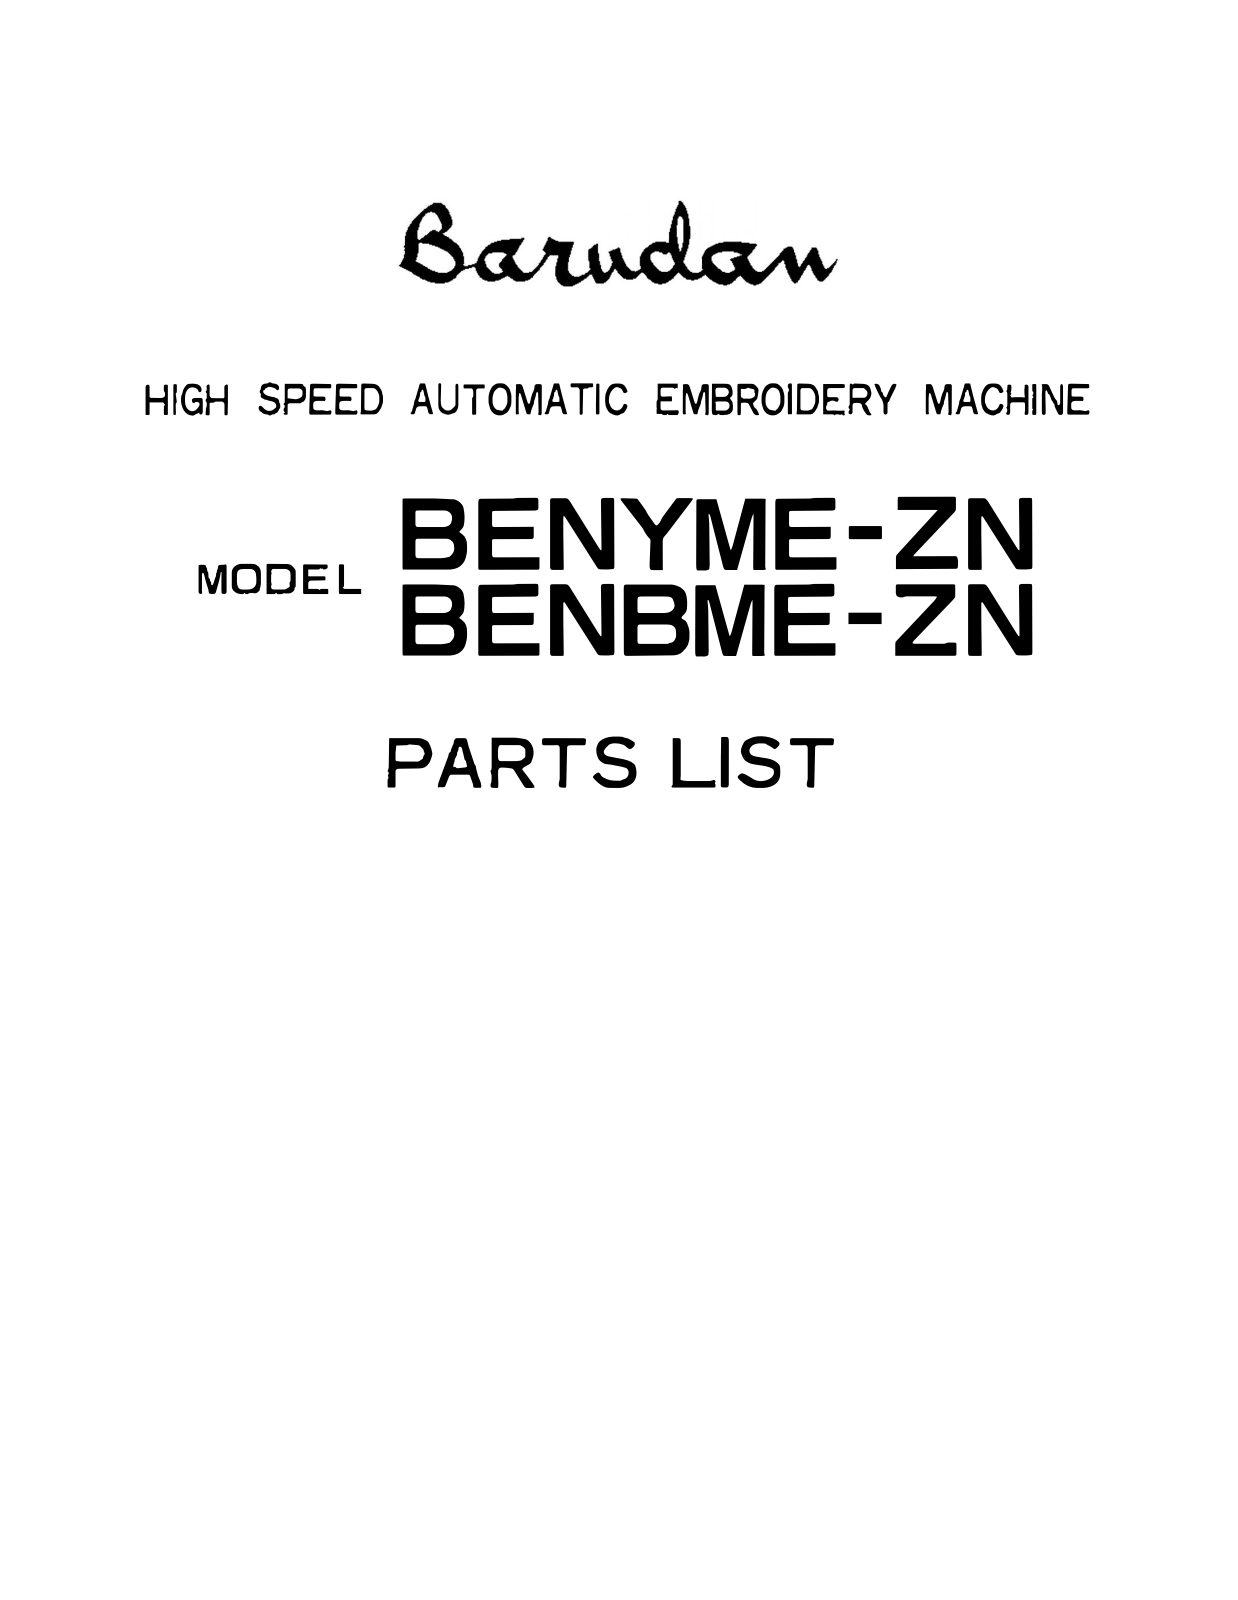 Barudan BENYME-ZN, BENBME-ZN Manual